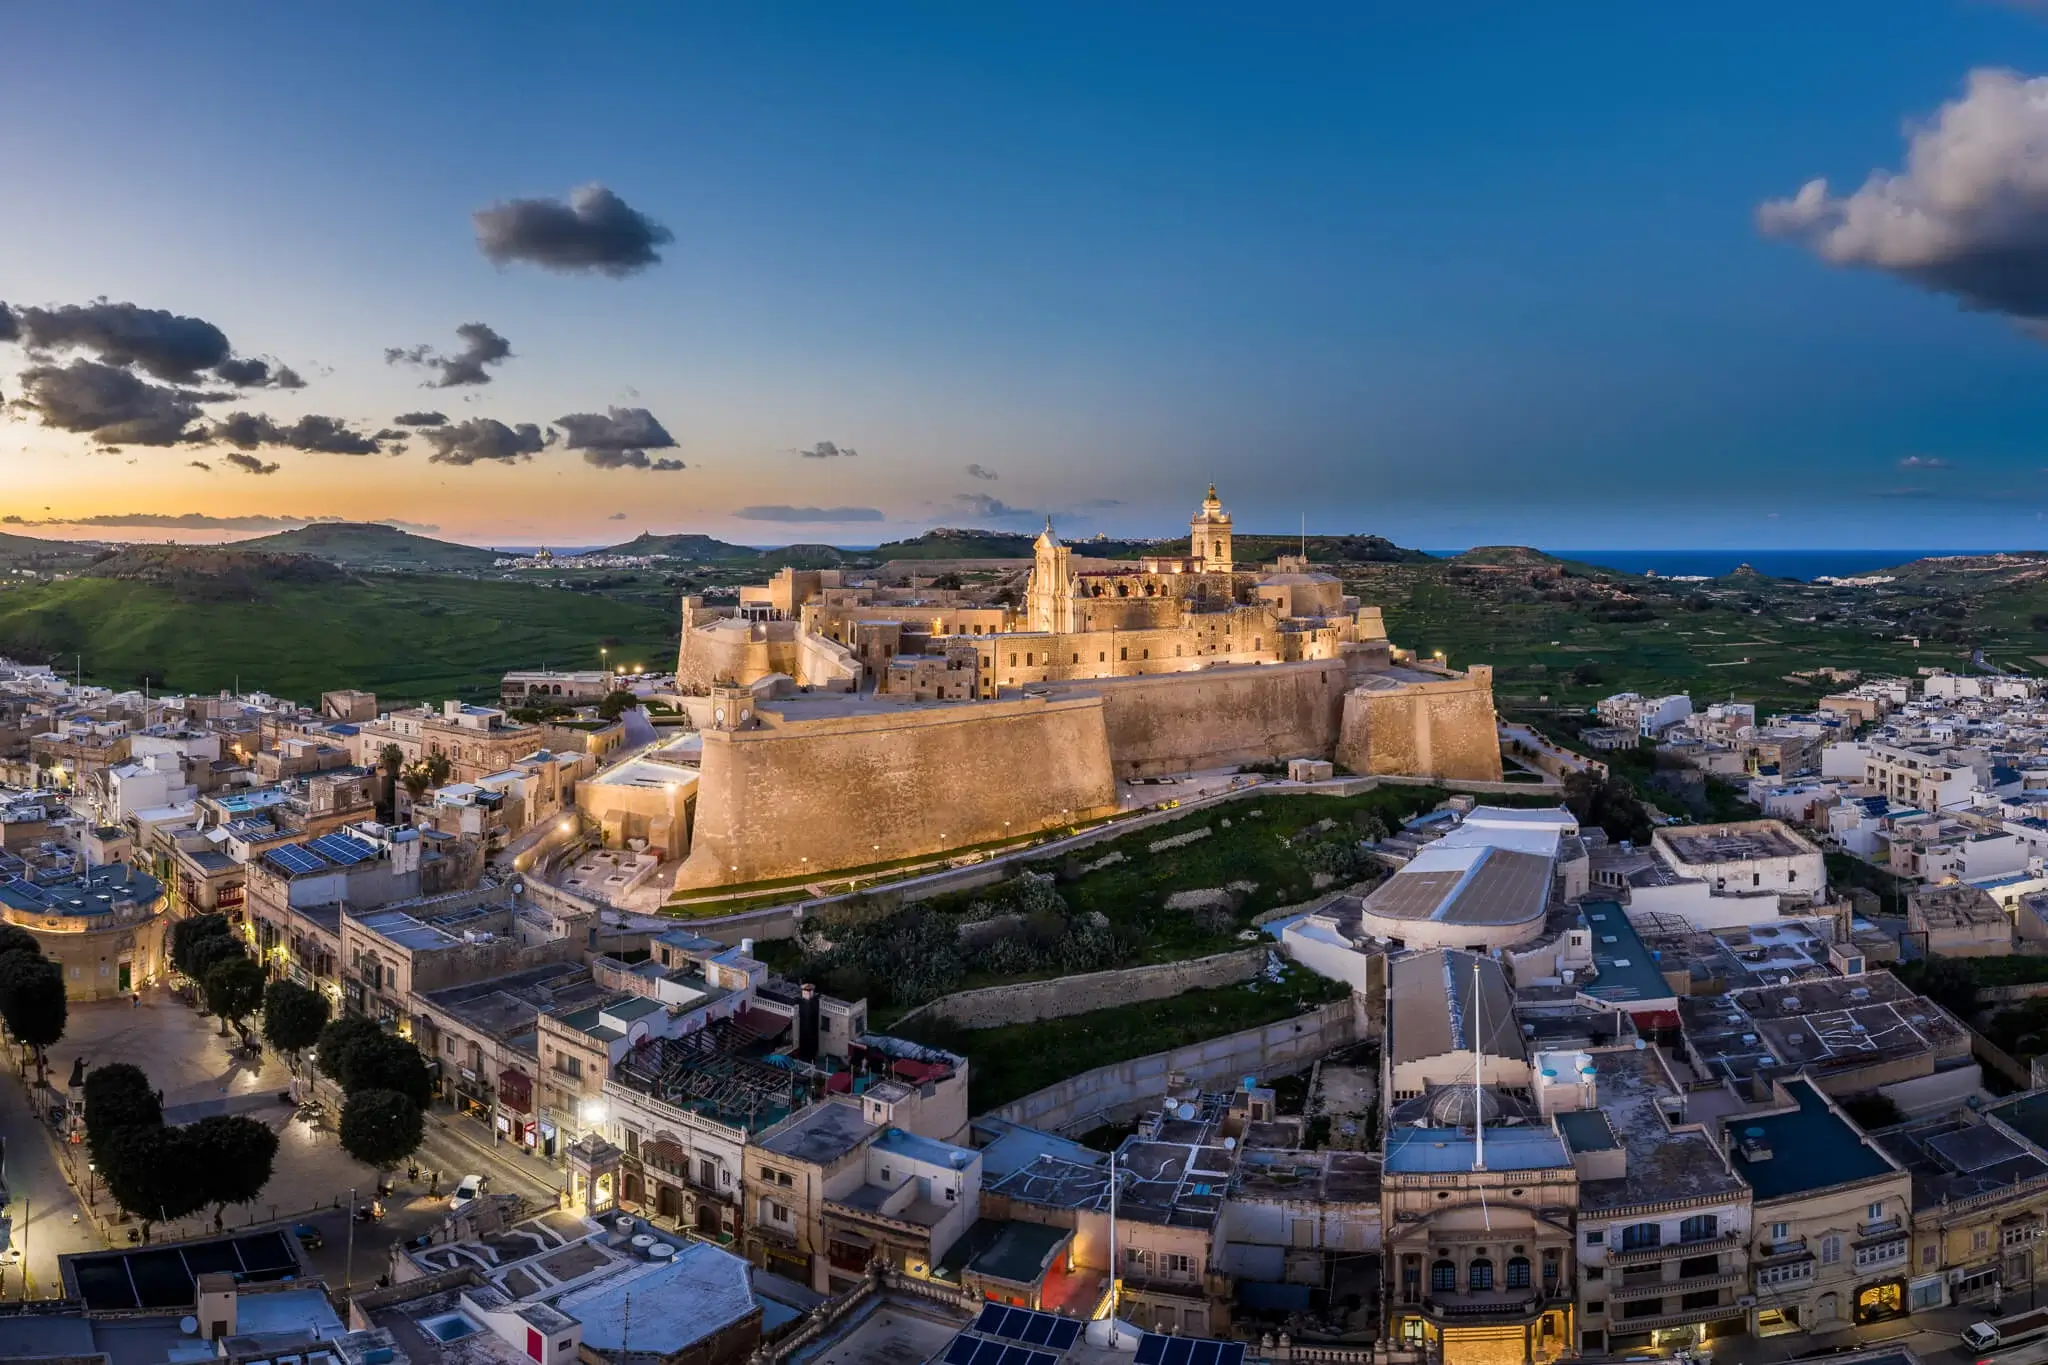 Malta Citadel on Gozo